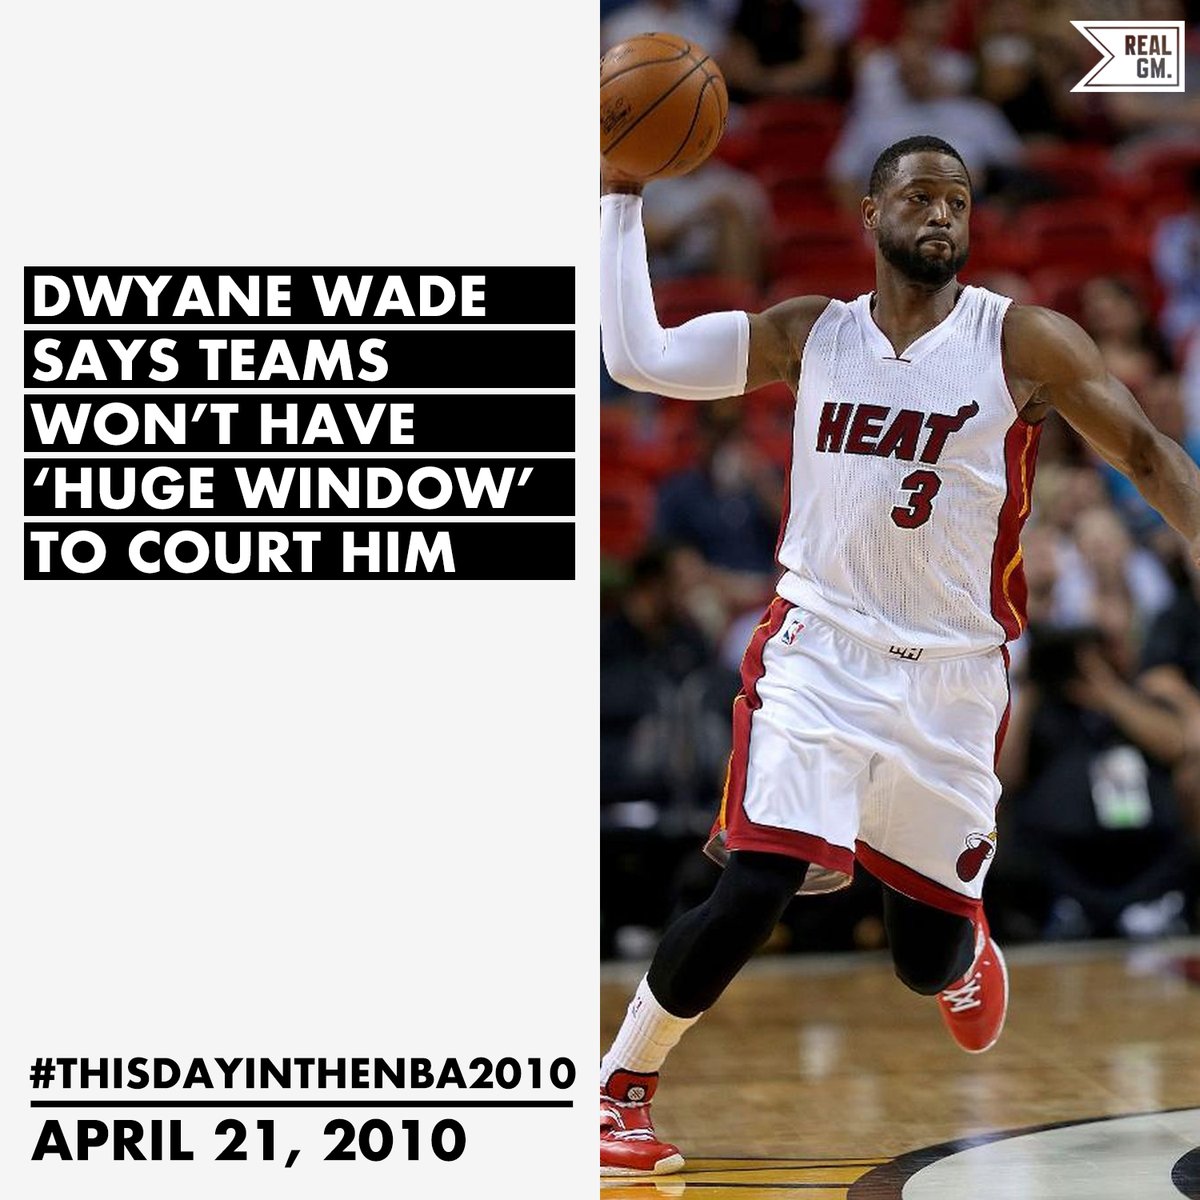  #ThisDayInTheNBA2010April 21, 2010Dwyane Wade Says Teams Won't Have 'A Huge Window' To Court Him https://basketball.realgm.com/wiretap/203437/Dwyane-Wade-Says-Teams-Wont-Have-A-Huge-Window-To-Court-Him